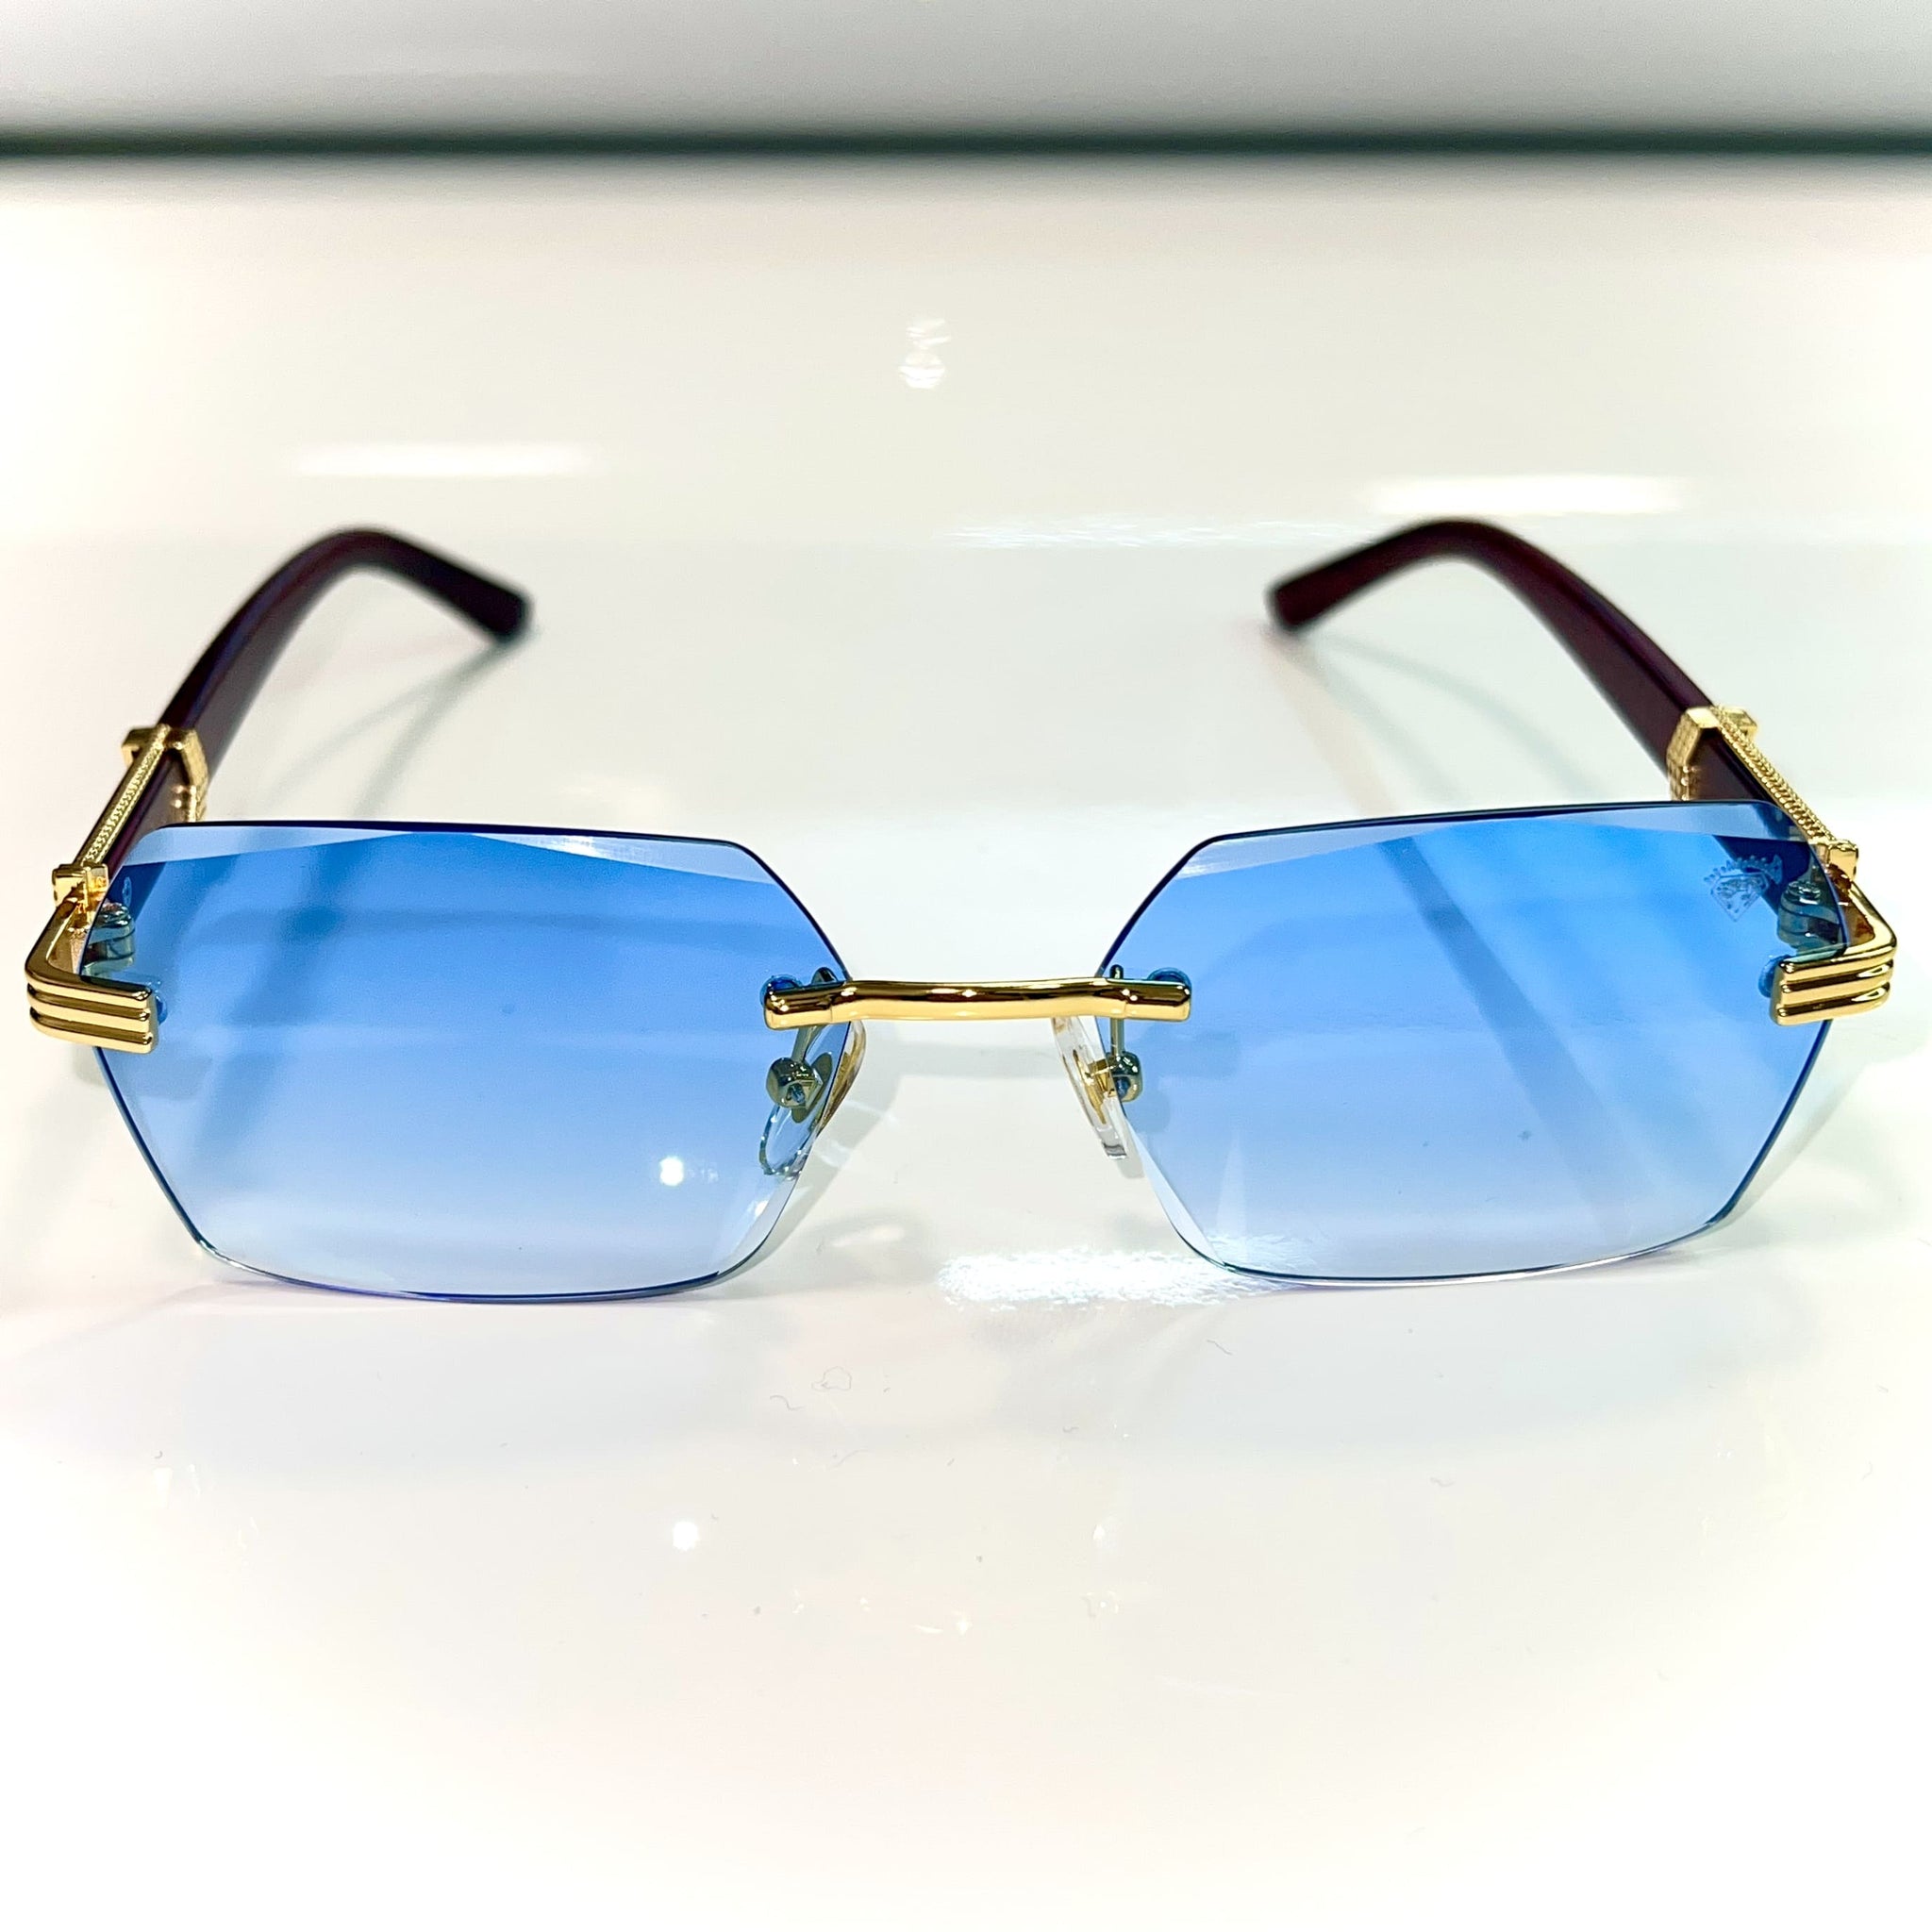 Sehgal Woodcut glasses - 14k gold plated - Blue shade - Gold / Woodgrain frame